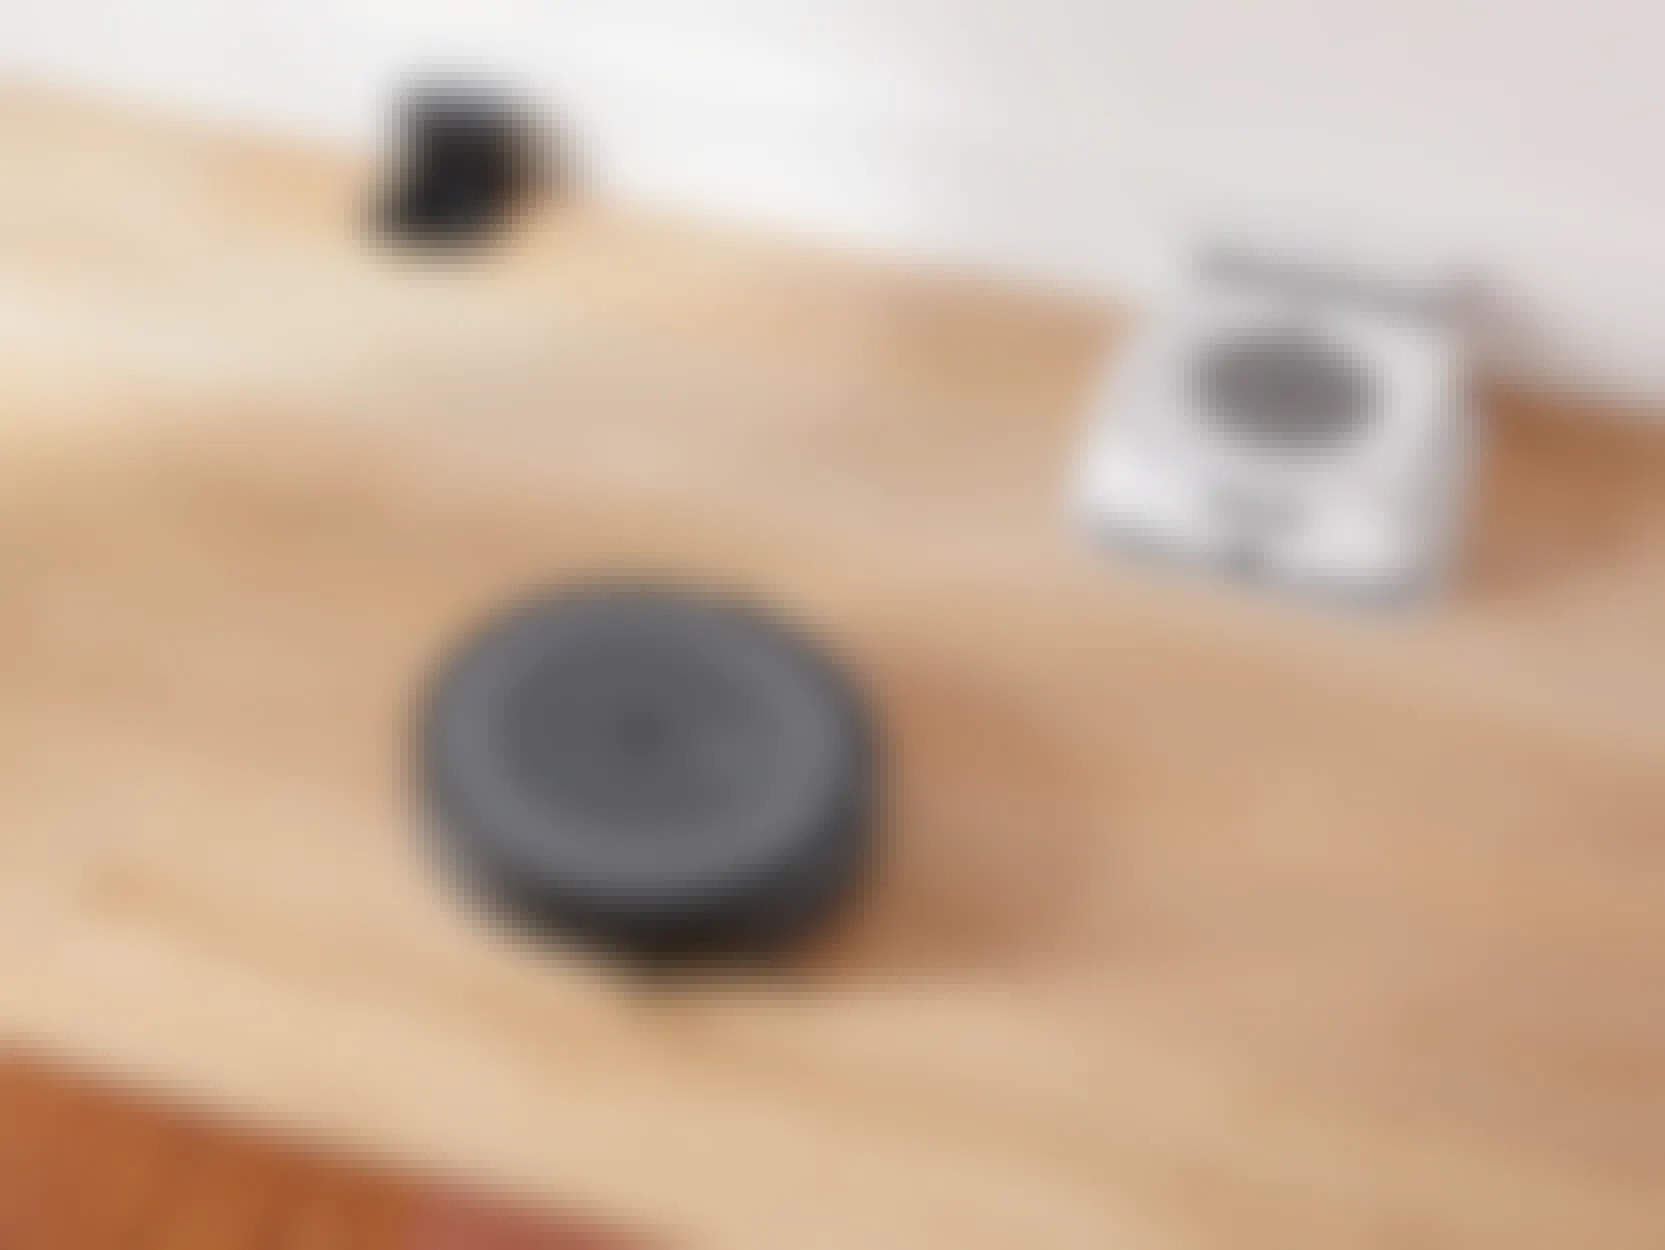 Amazon iRobot Roomba vacuum on a hardwood floor